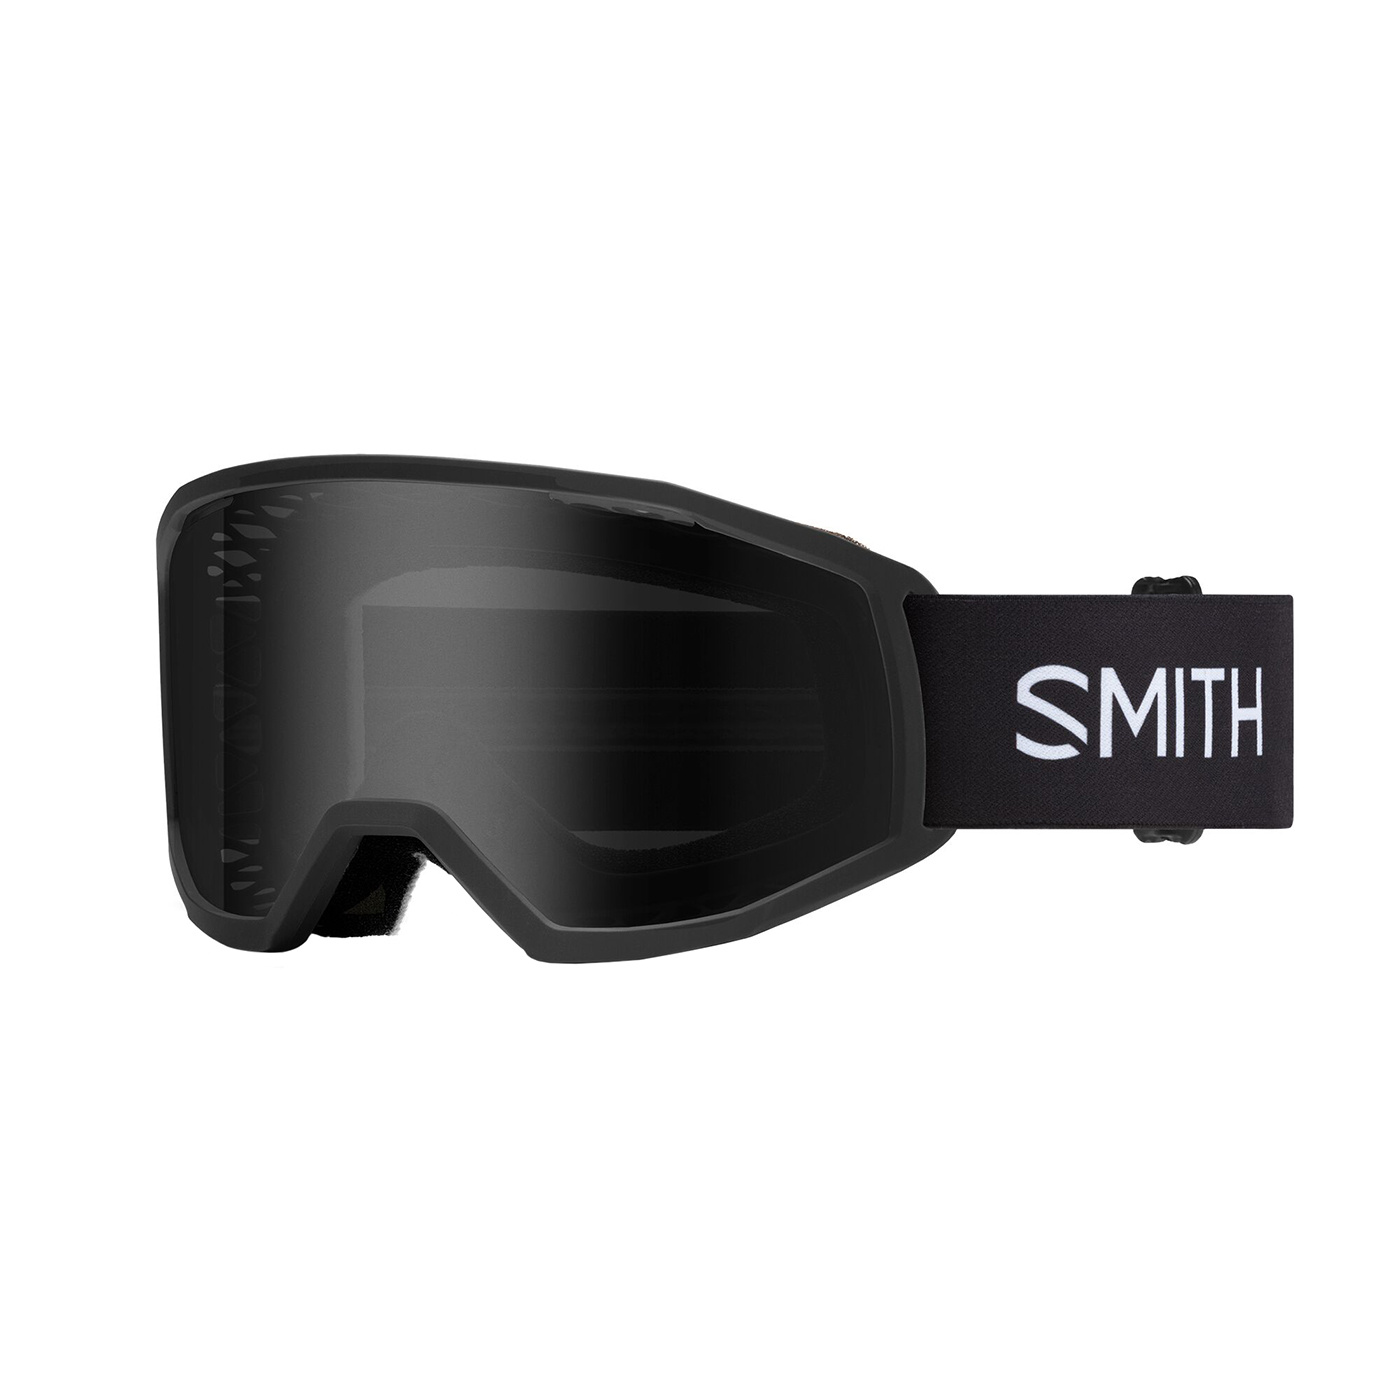 Smith Loam S Goggles - The Inside Line Mountain Bike Service Ltd.